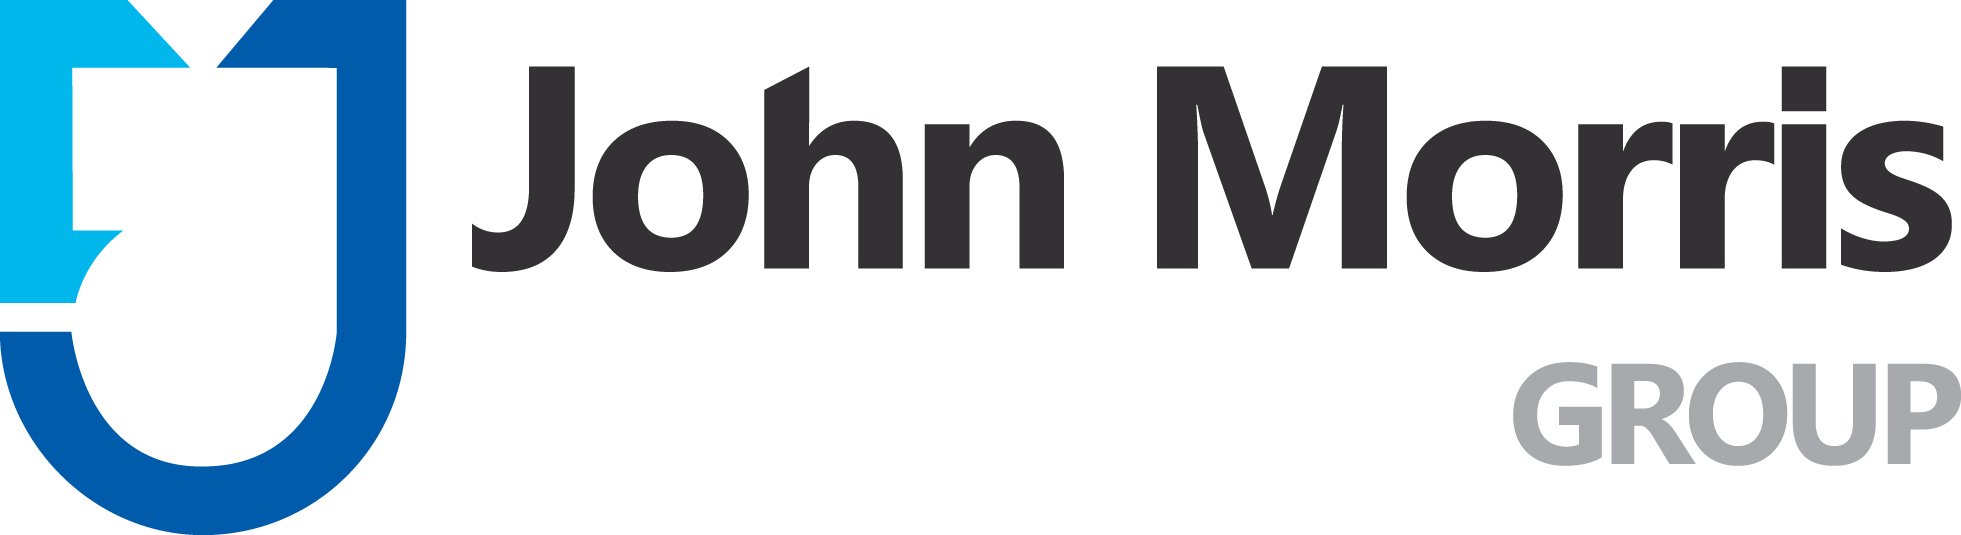 John Morris logo